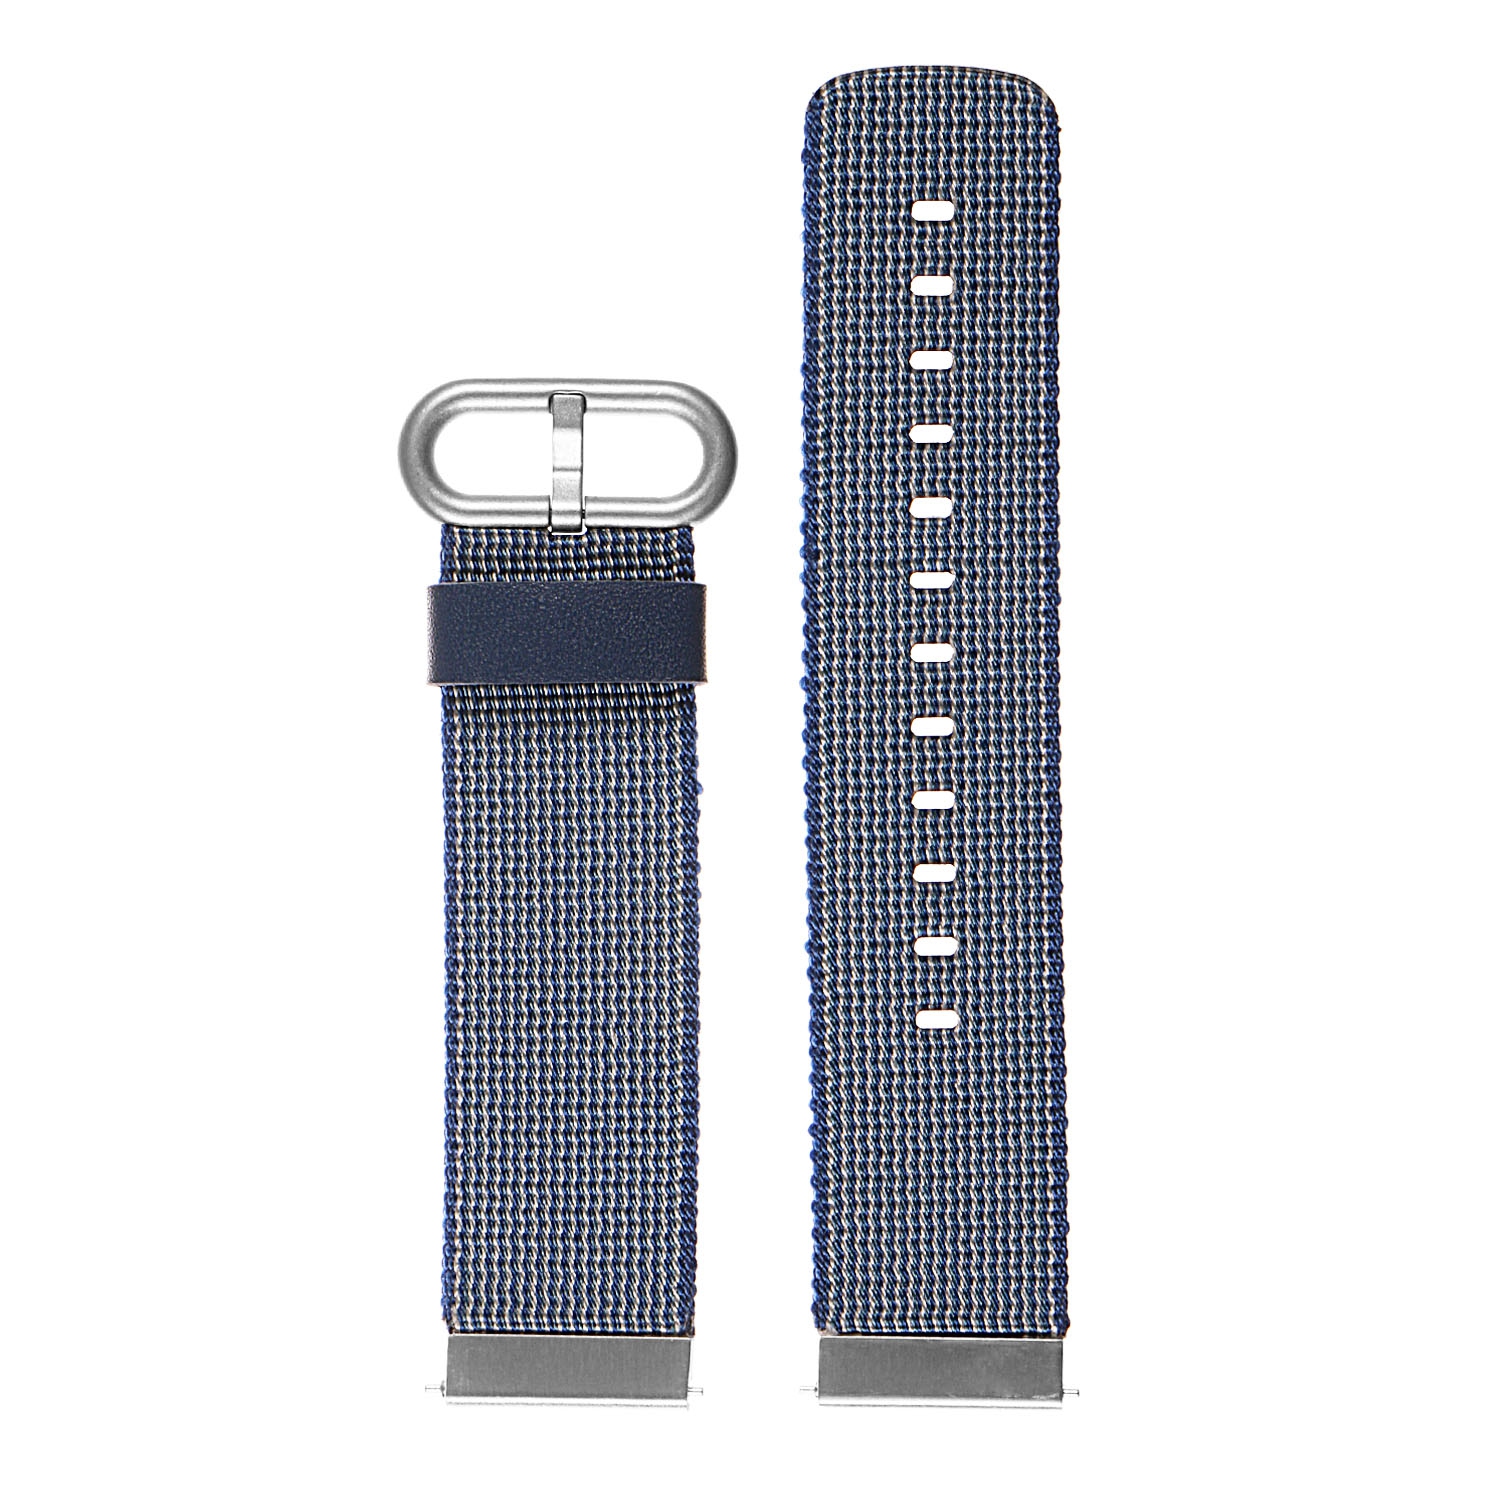 StrapsCo Ballistic Woven Nylon Replacement Watch Band Strap for Samsung Gear S3 Classic/Frontier - Dark Blue